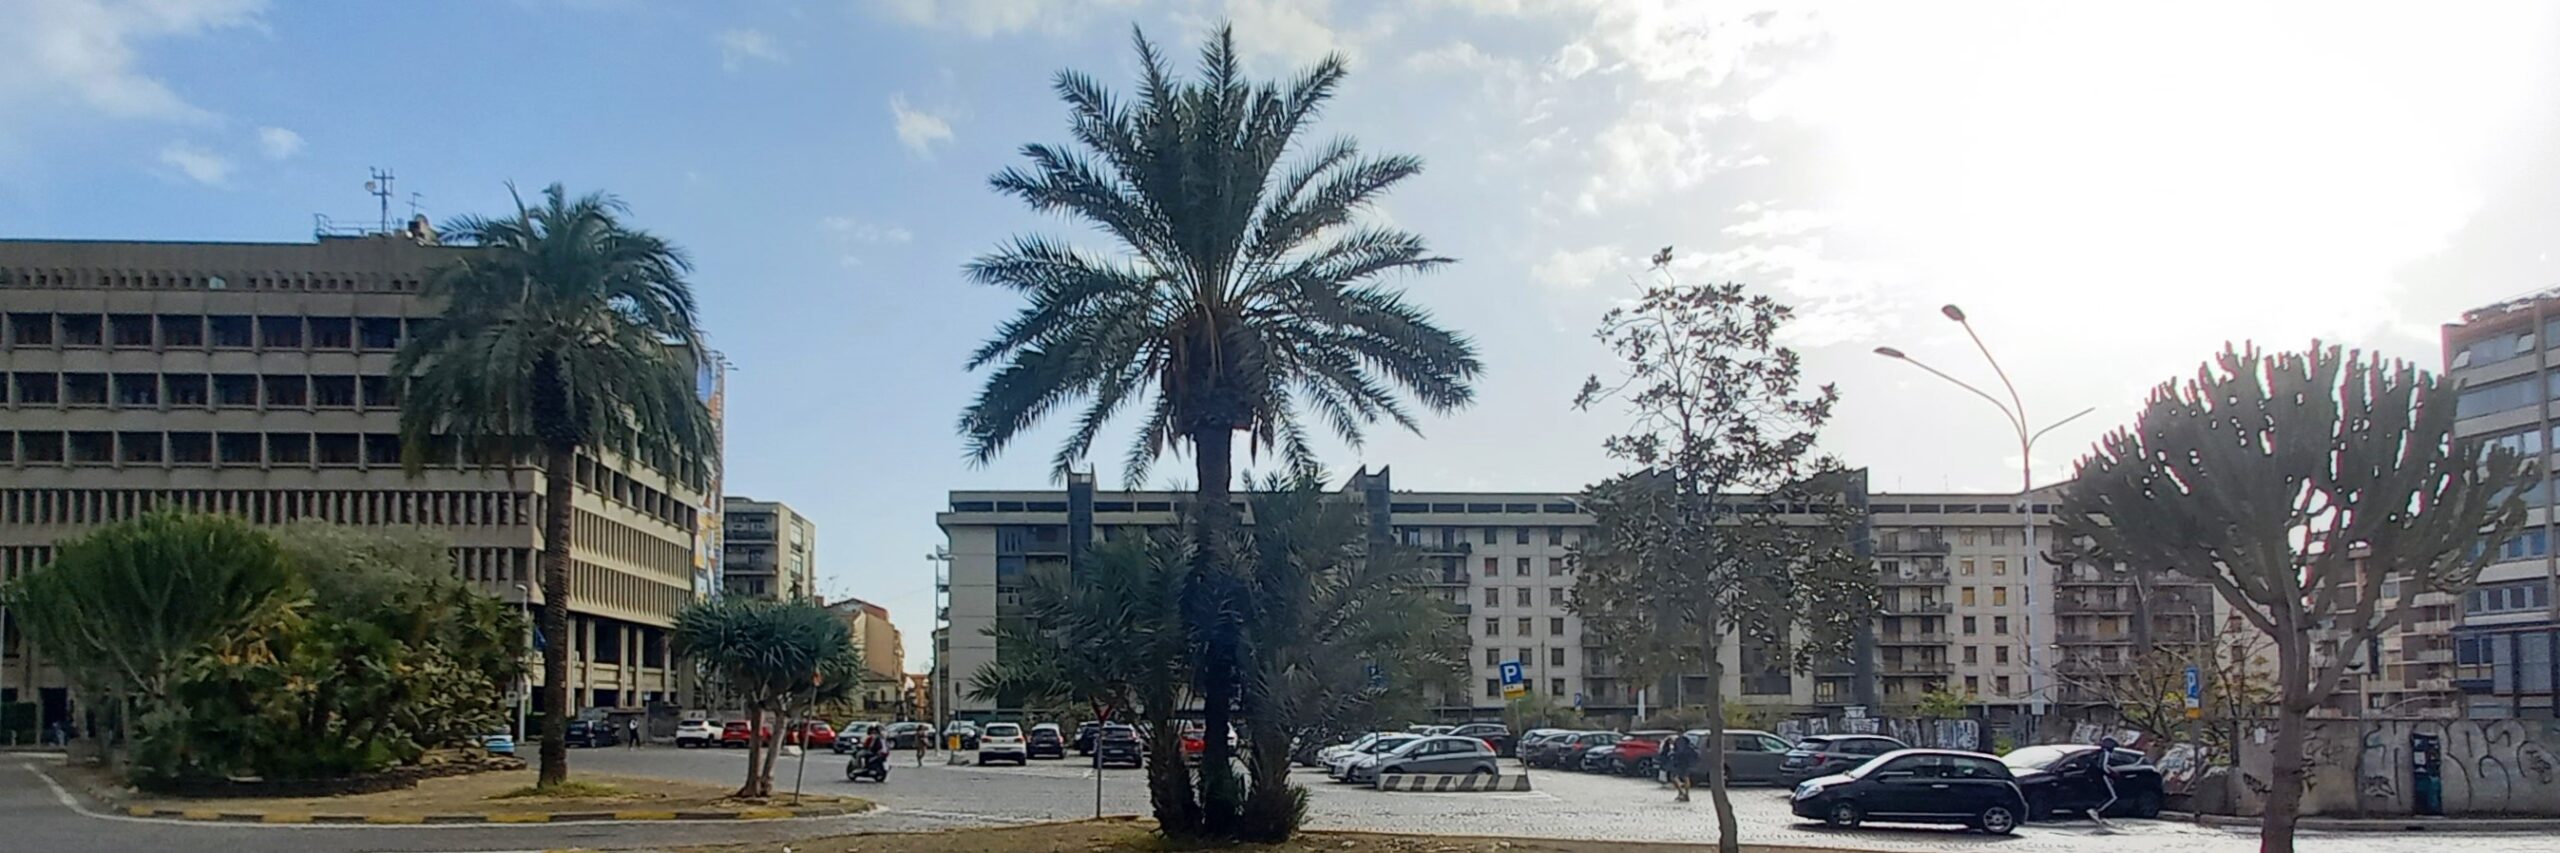 catania visionaria verde urbano palma corso sicilia 1mqdb